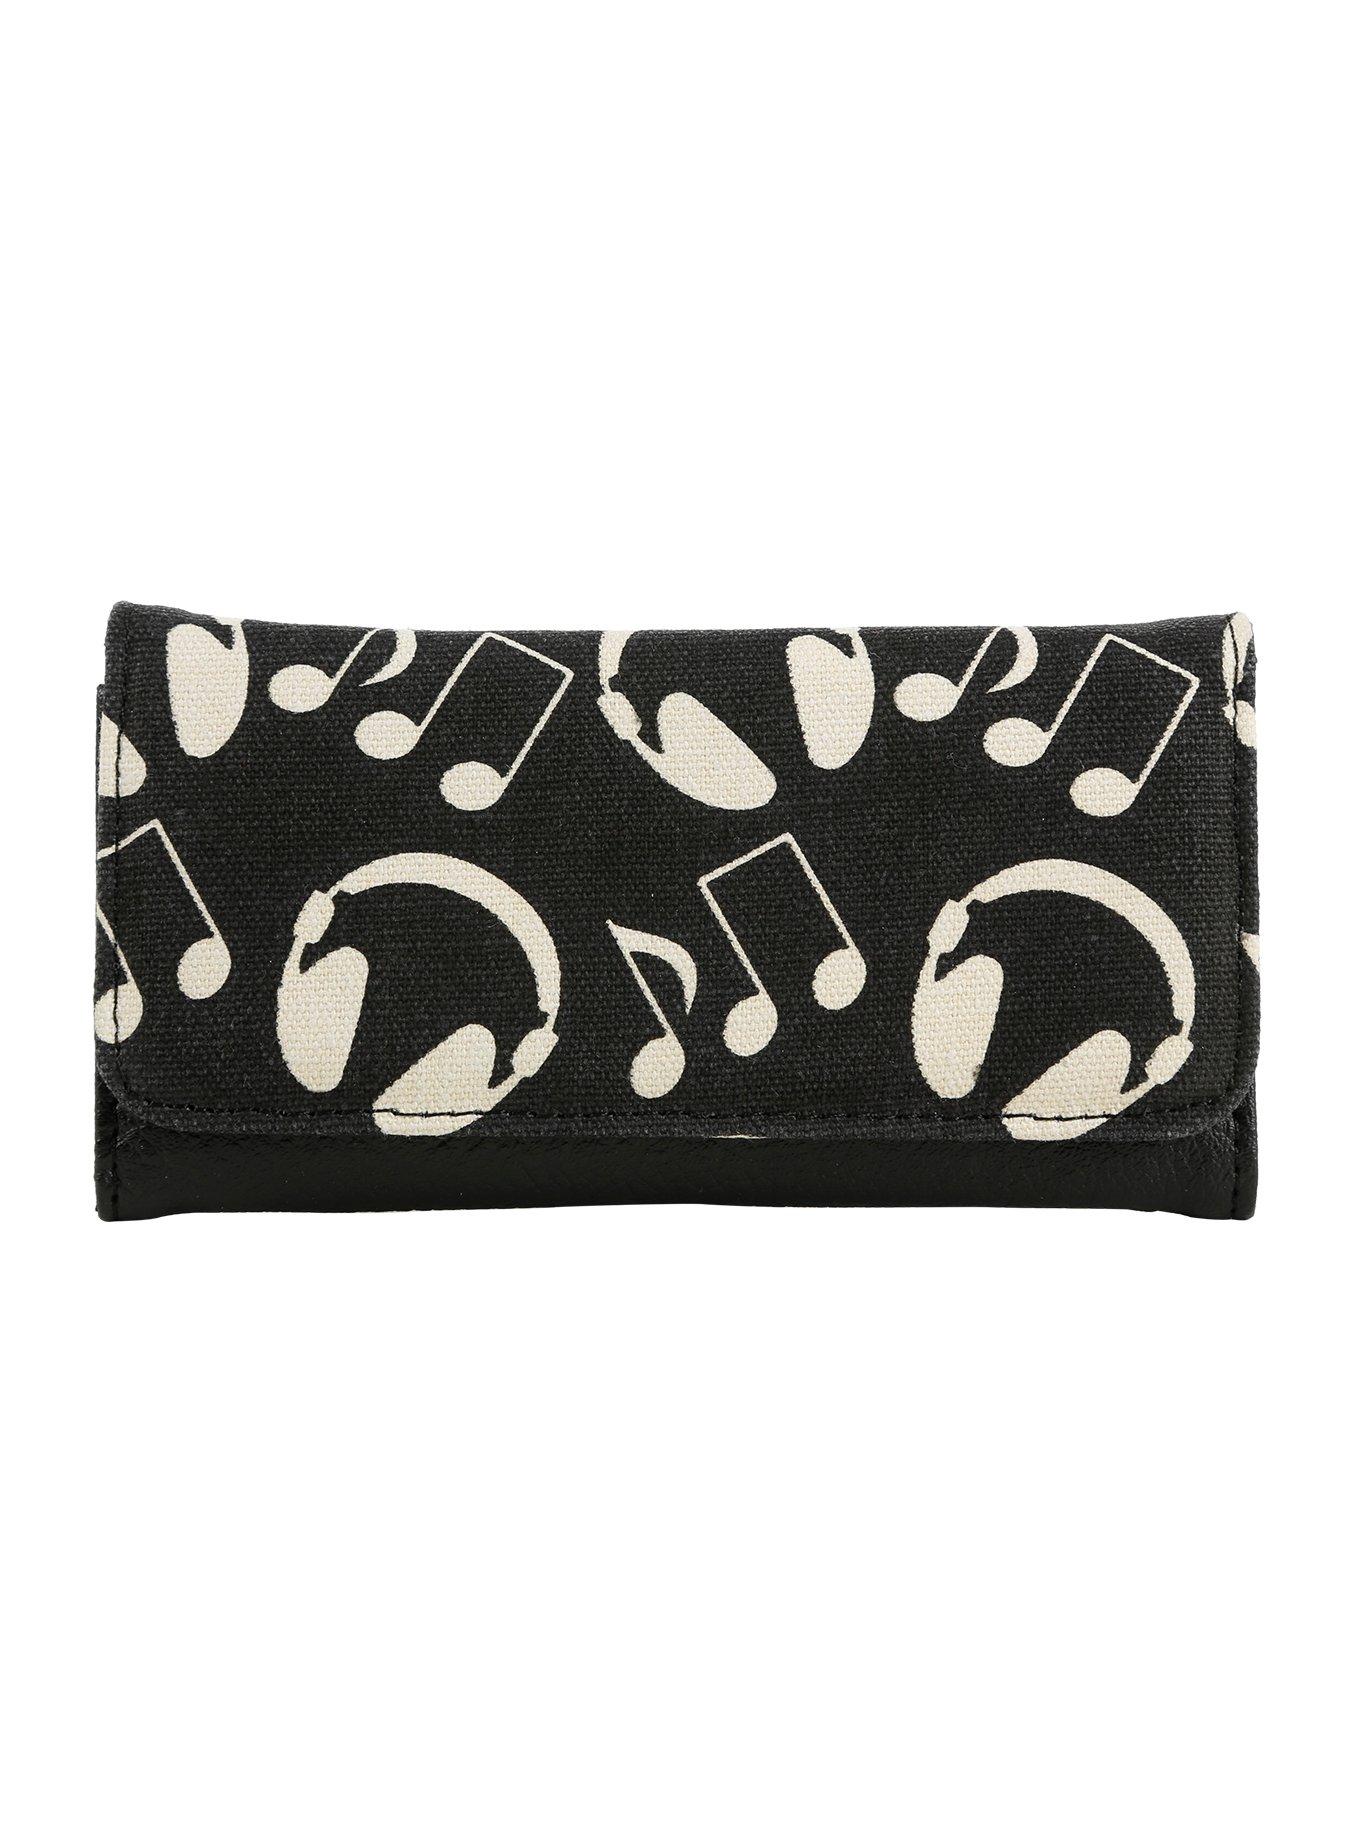 Black & Ivory Headphones & Music Notes Flap Wallet, , hi-res